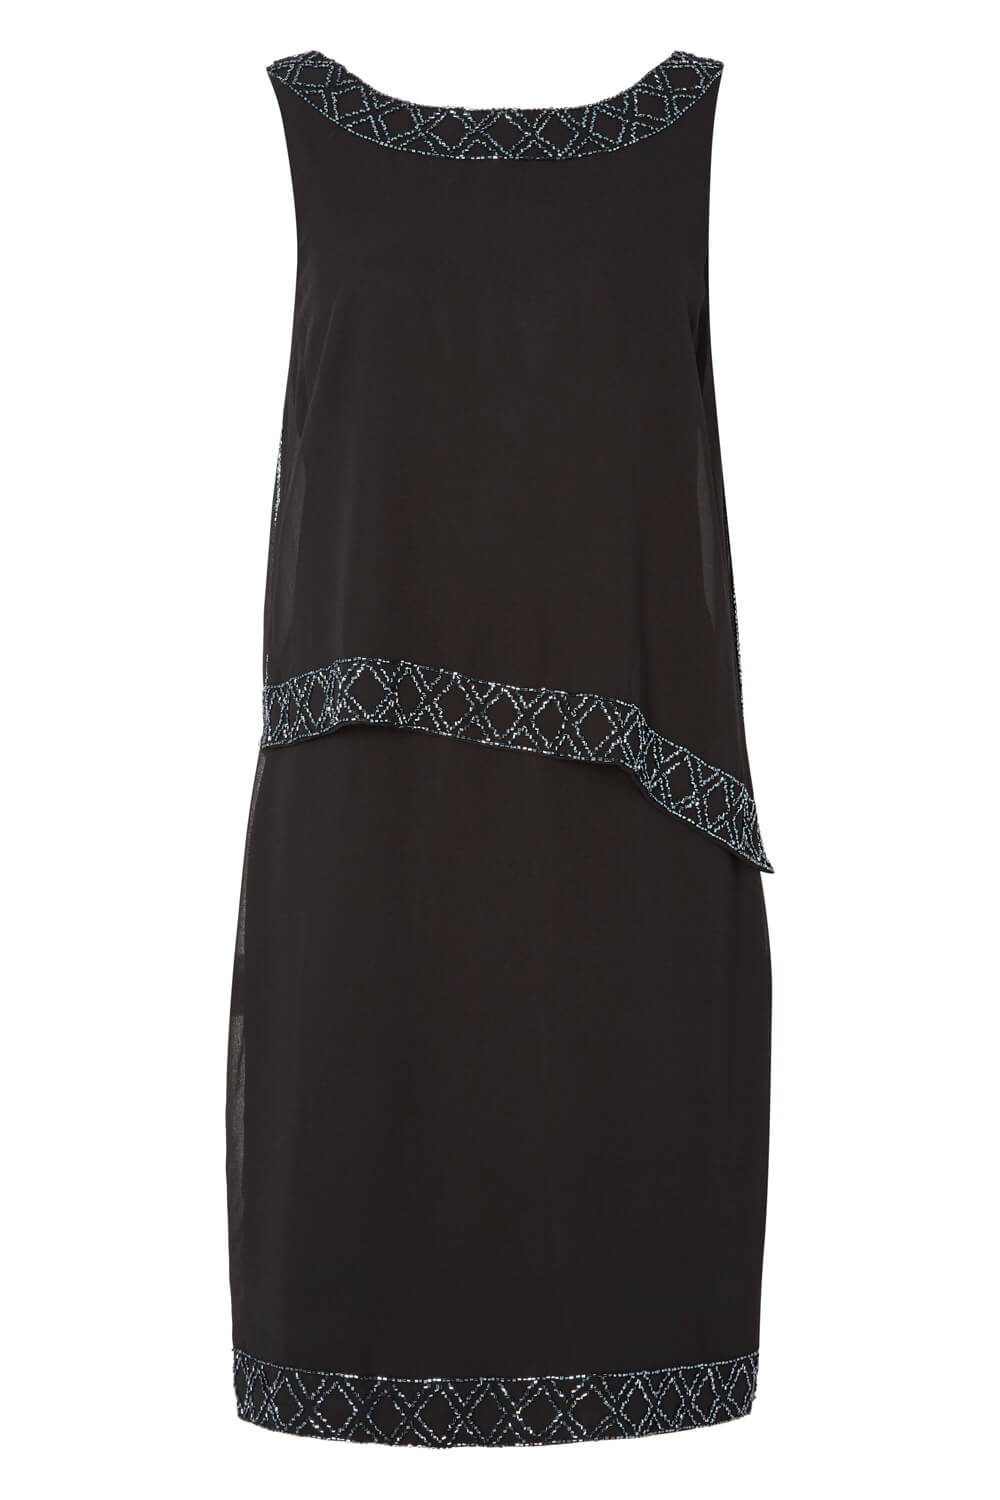 Black Embellished Double Layer Dress, Image 4 of 4